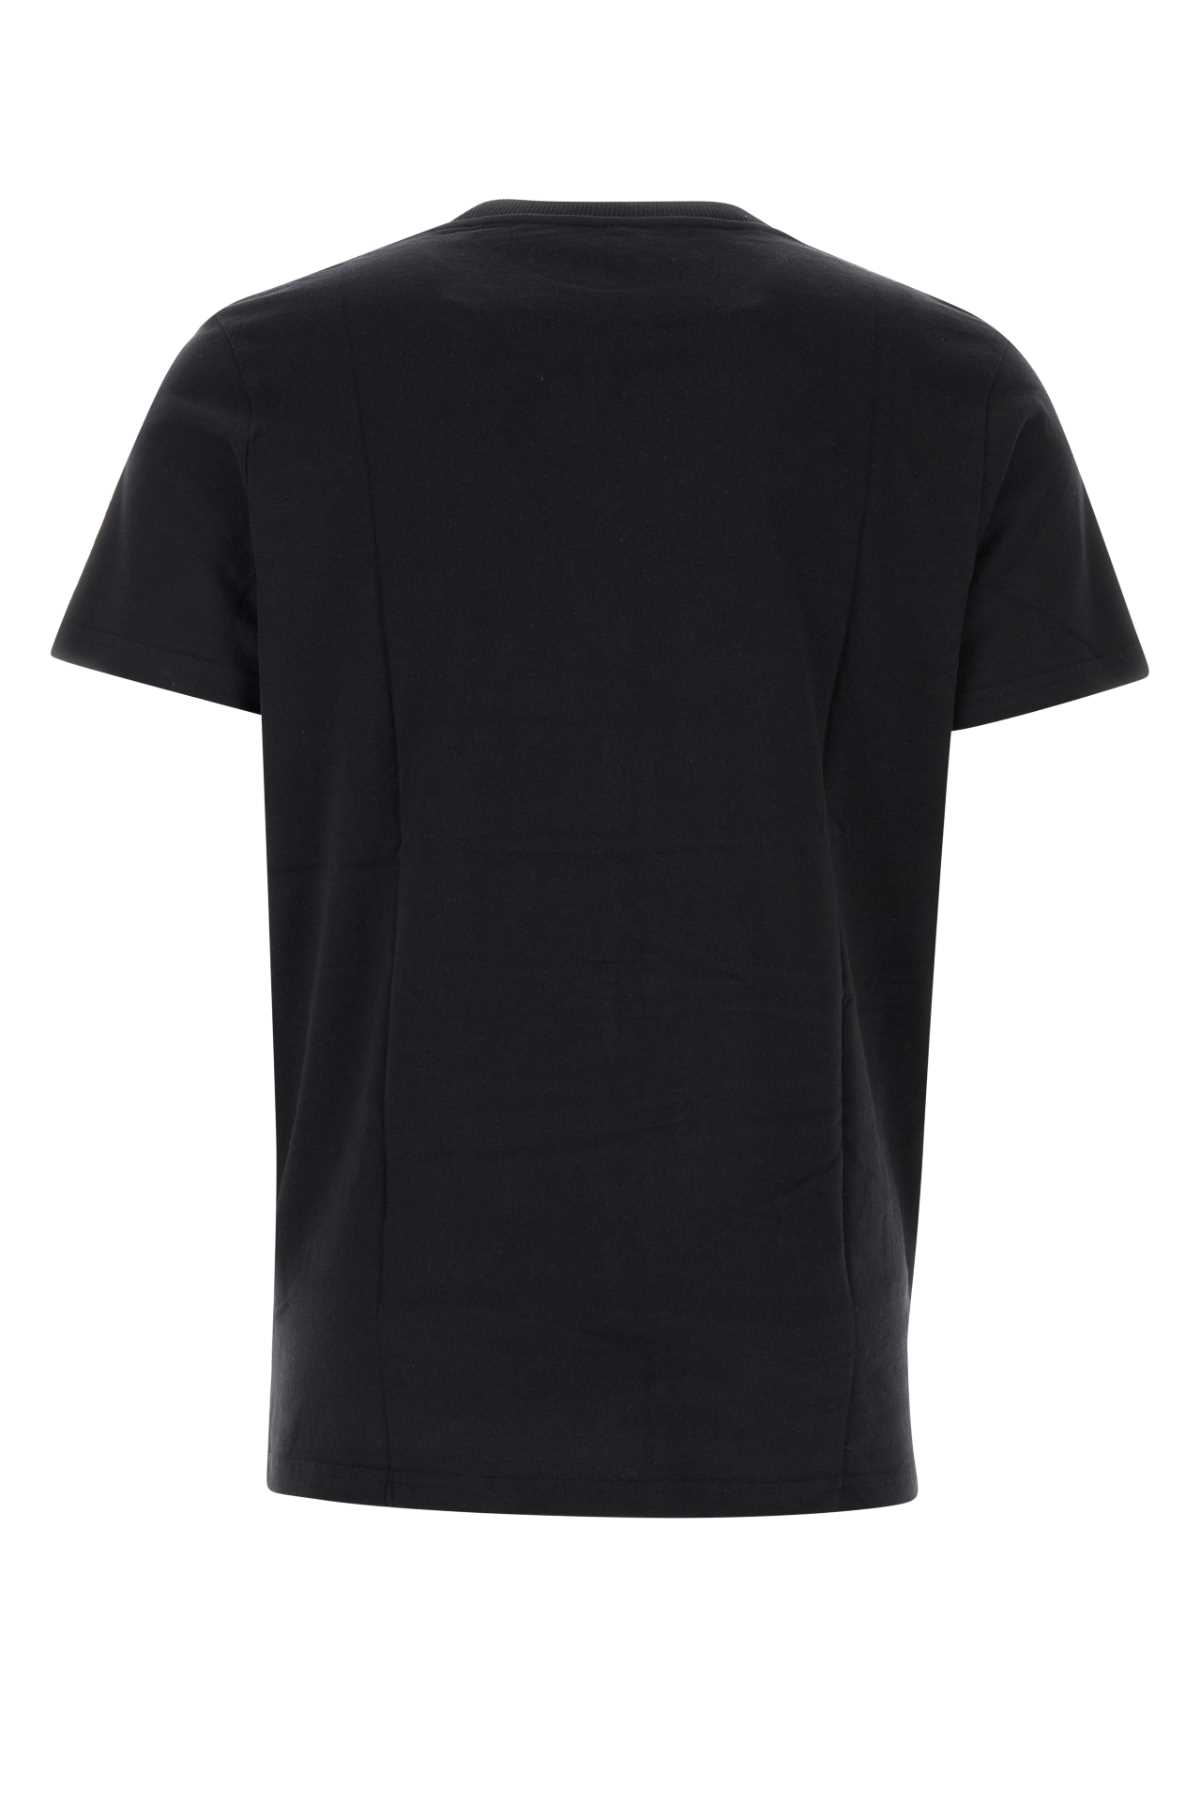 Alyx Black Cotton T-shirt Set In Blk0001